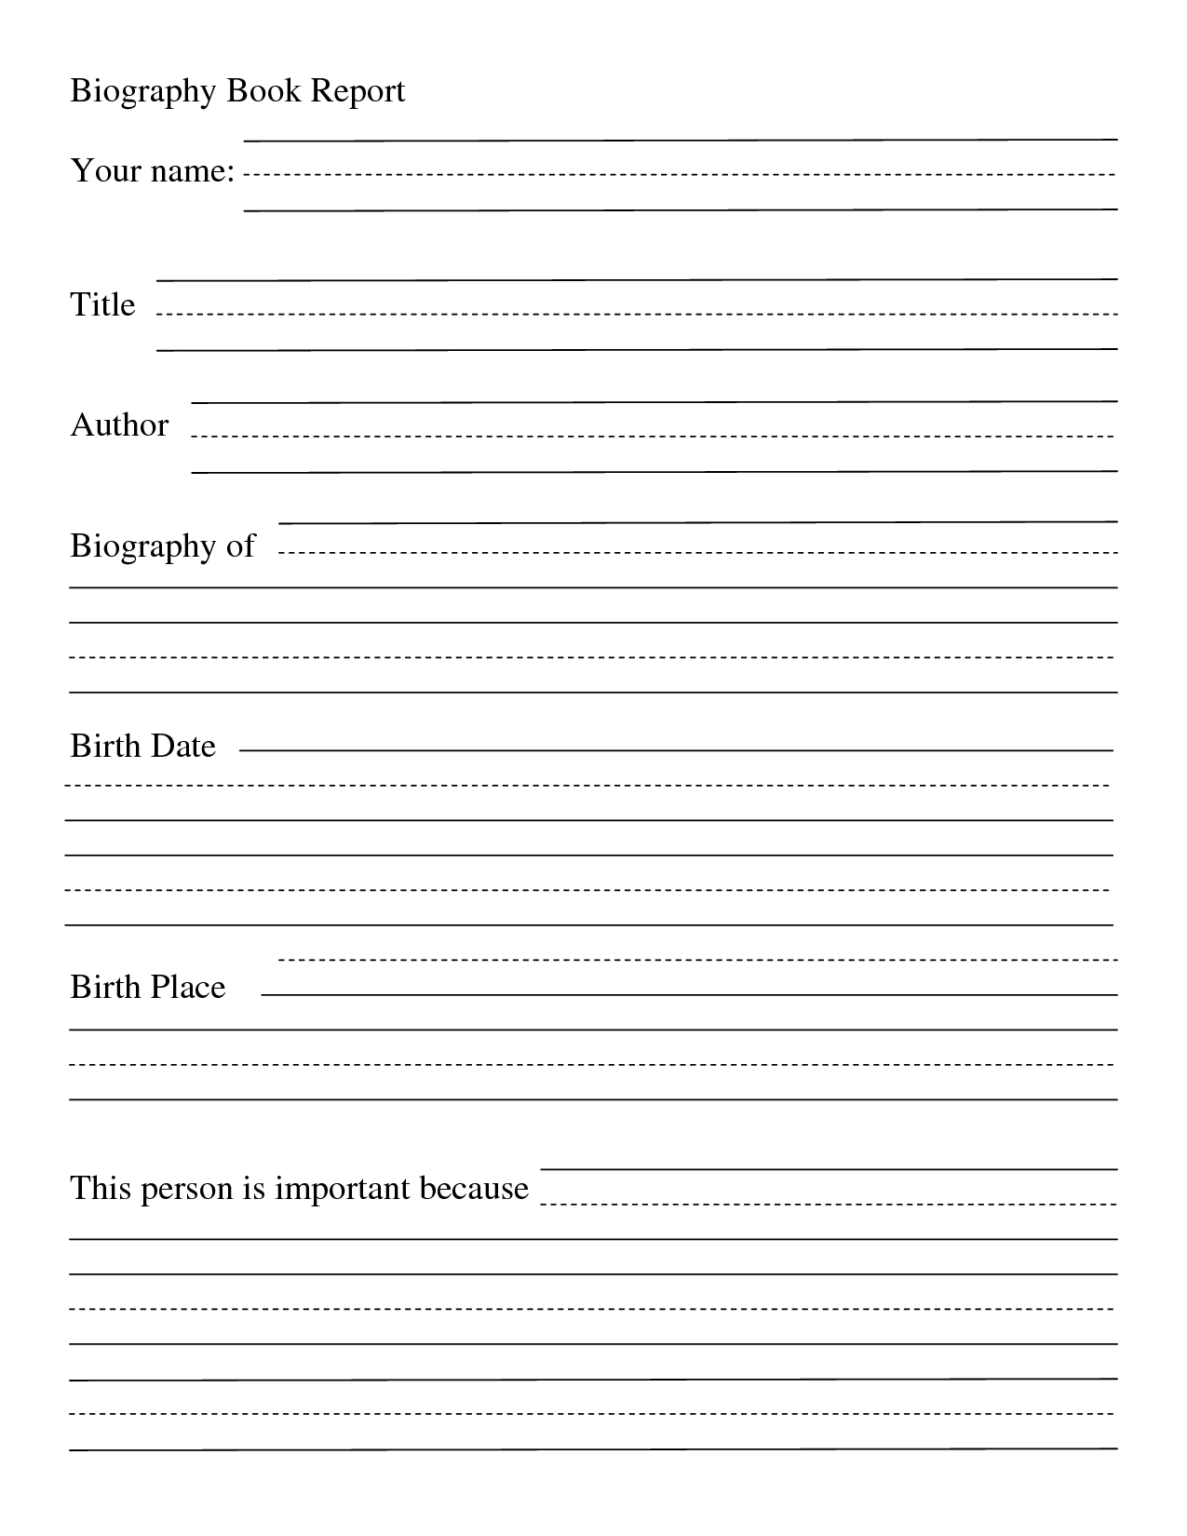 biography report template pdf